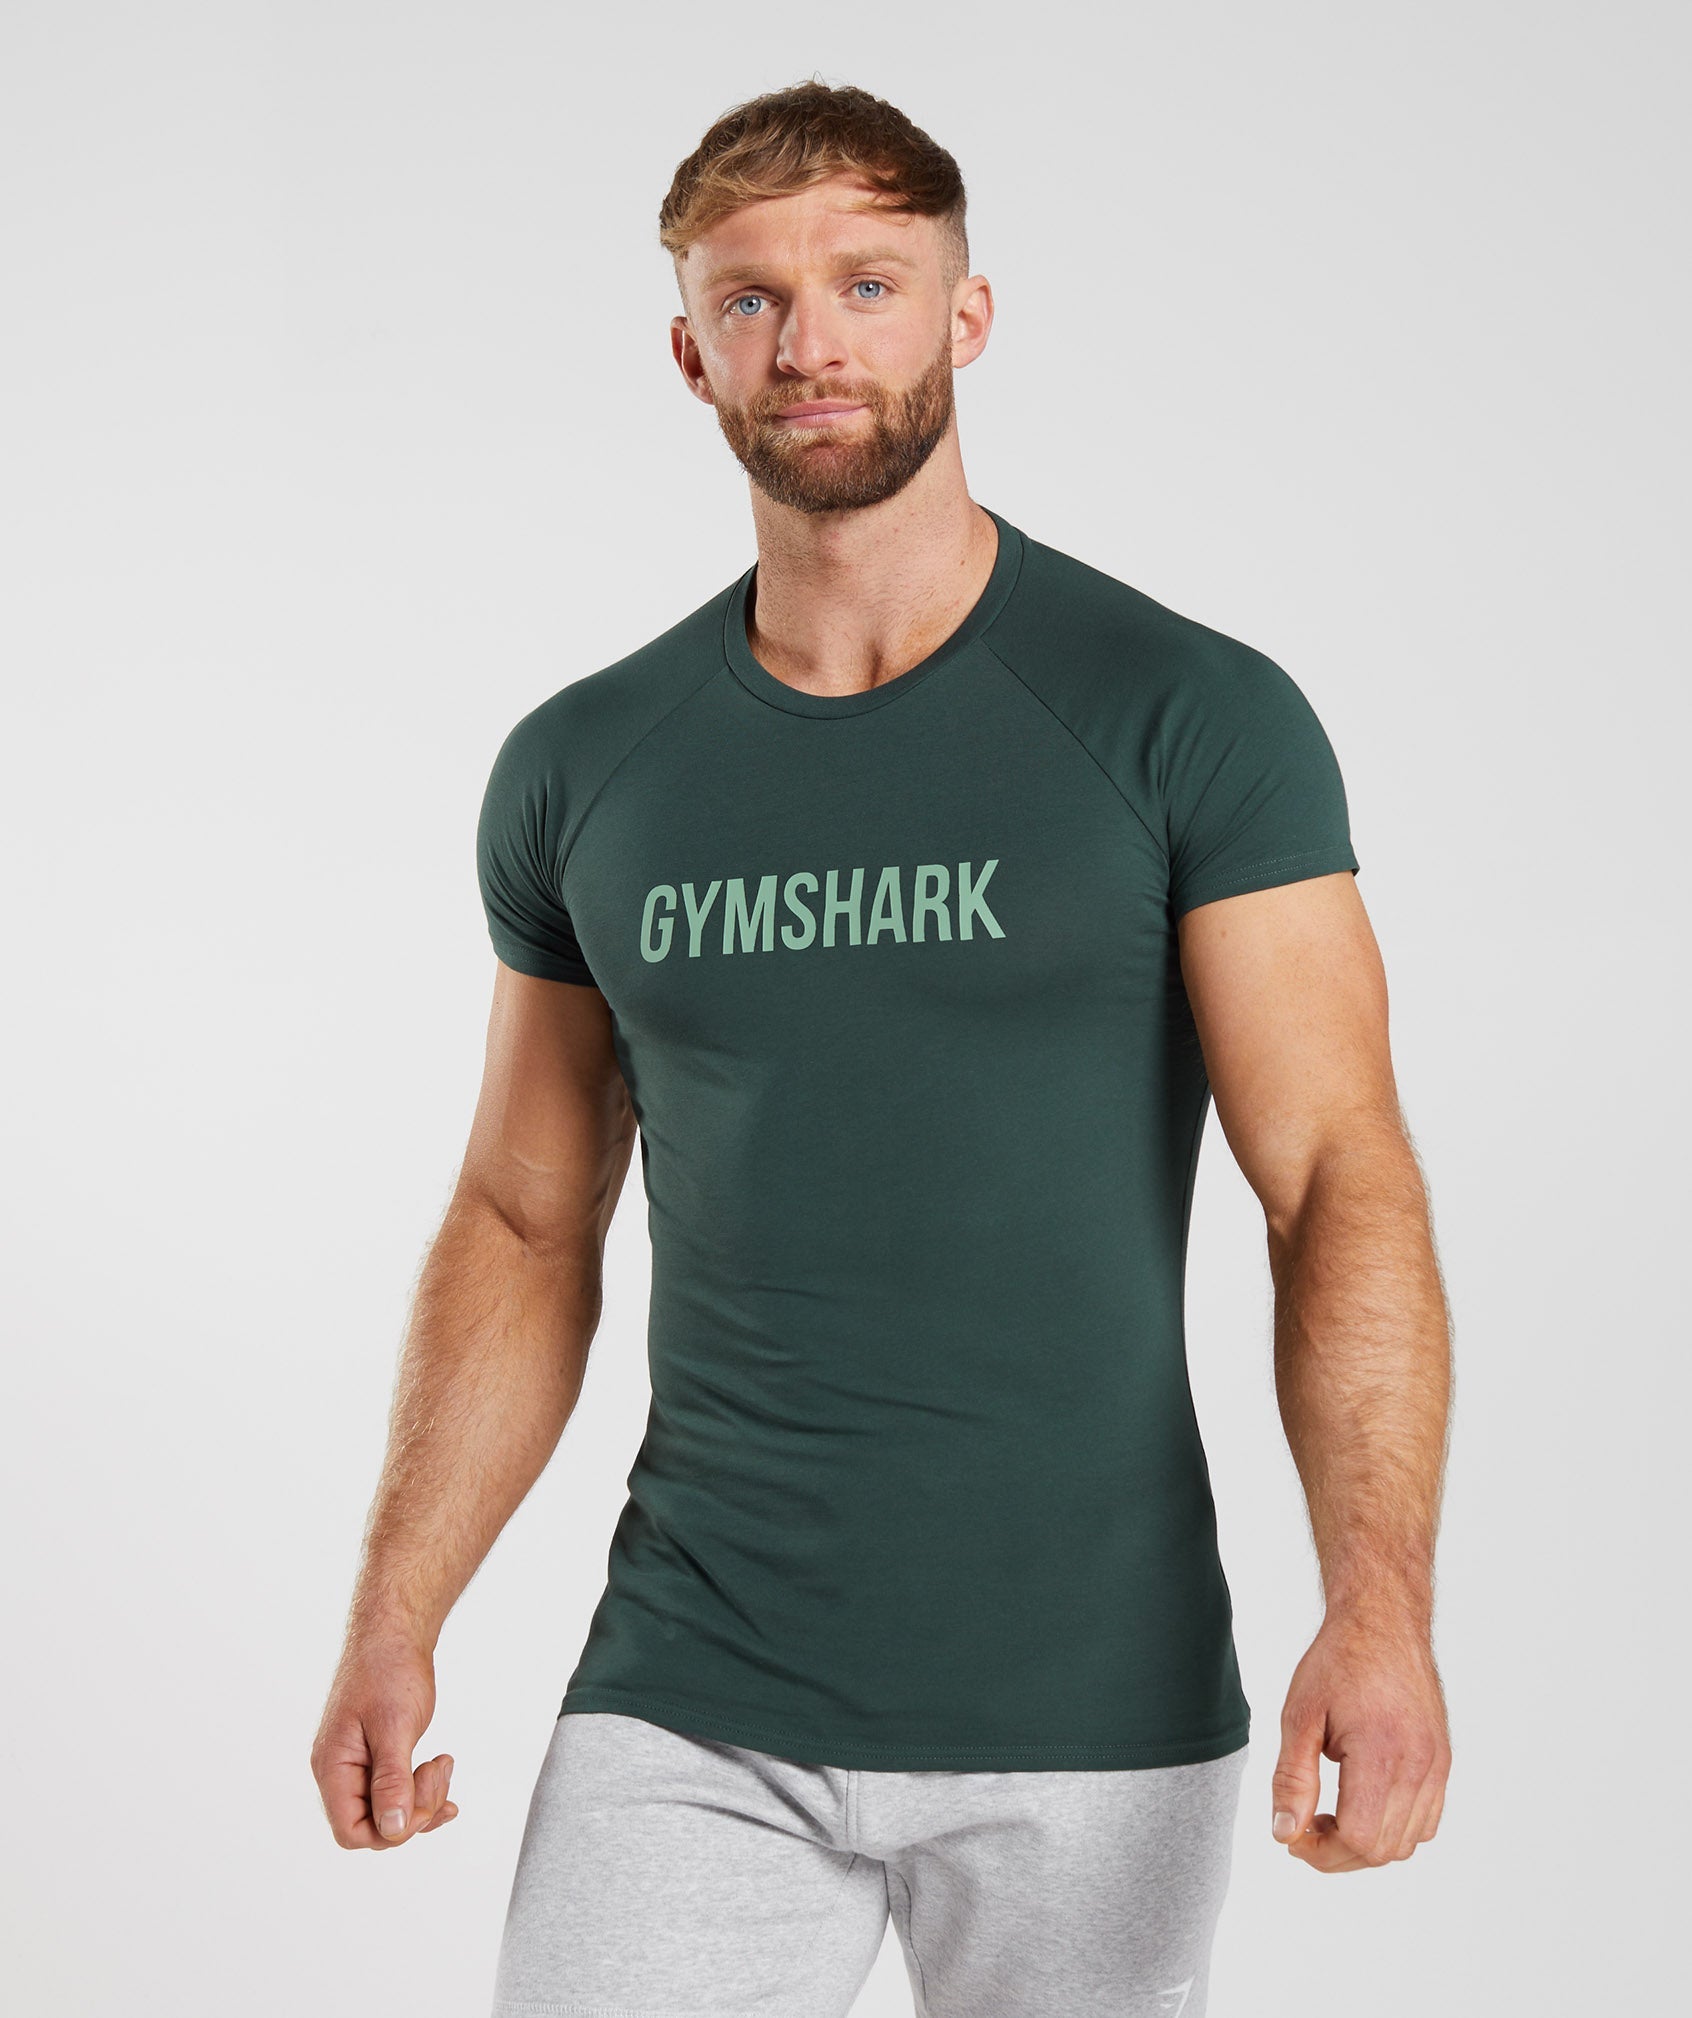 Camiseta Gymshark Hombre Negros Online Mexico - Comprar Gymshark En Oferta